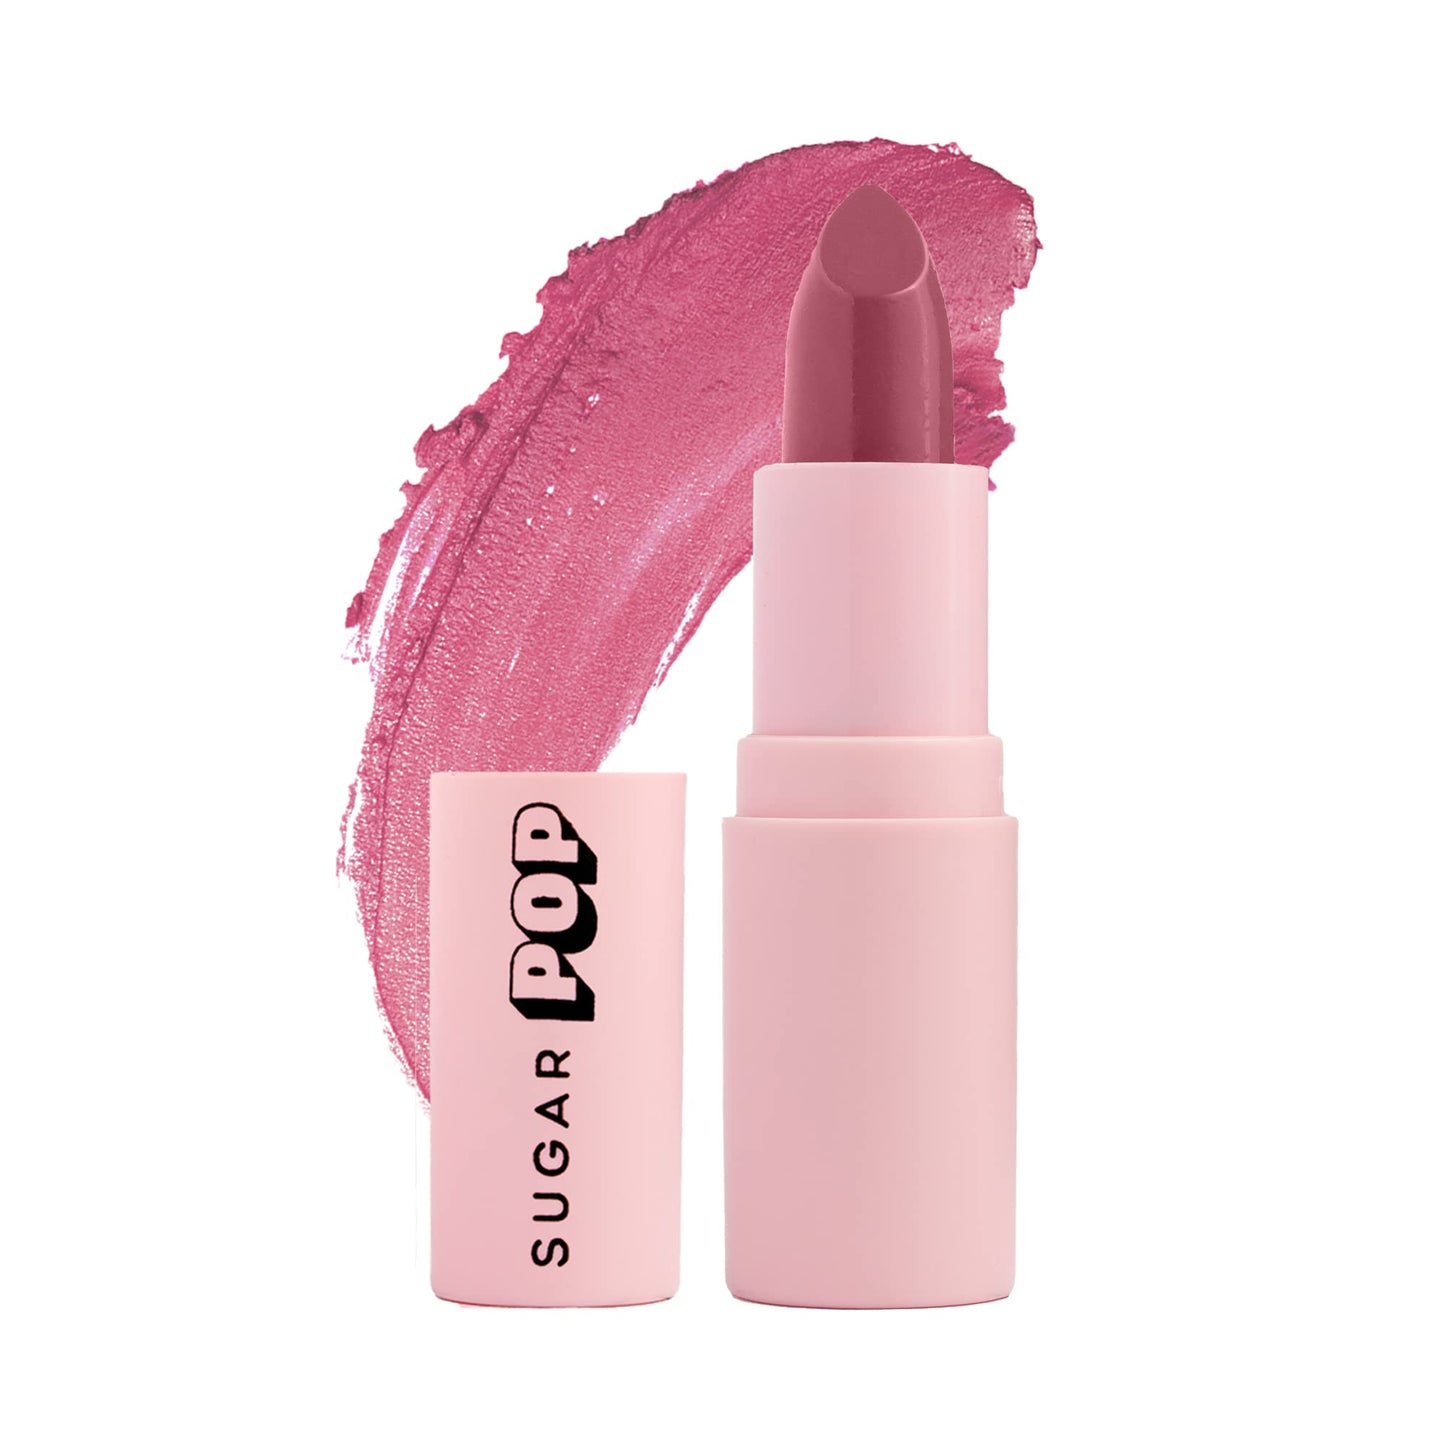 SUGAR POP Matte Lipstick - 01 Taupe (Dusty Rose) – 4.2 gm – l Lipstick for Women & SUGAR POP Nourishing Lip Balm, 4.5g - 02 Cherry (Cherry Red)